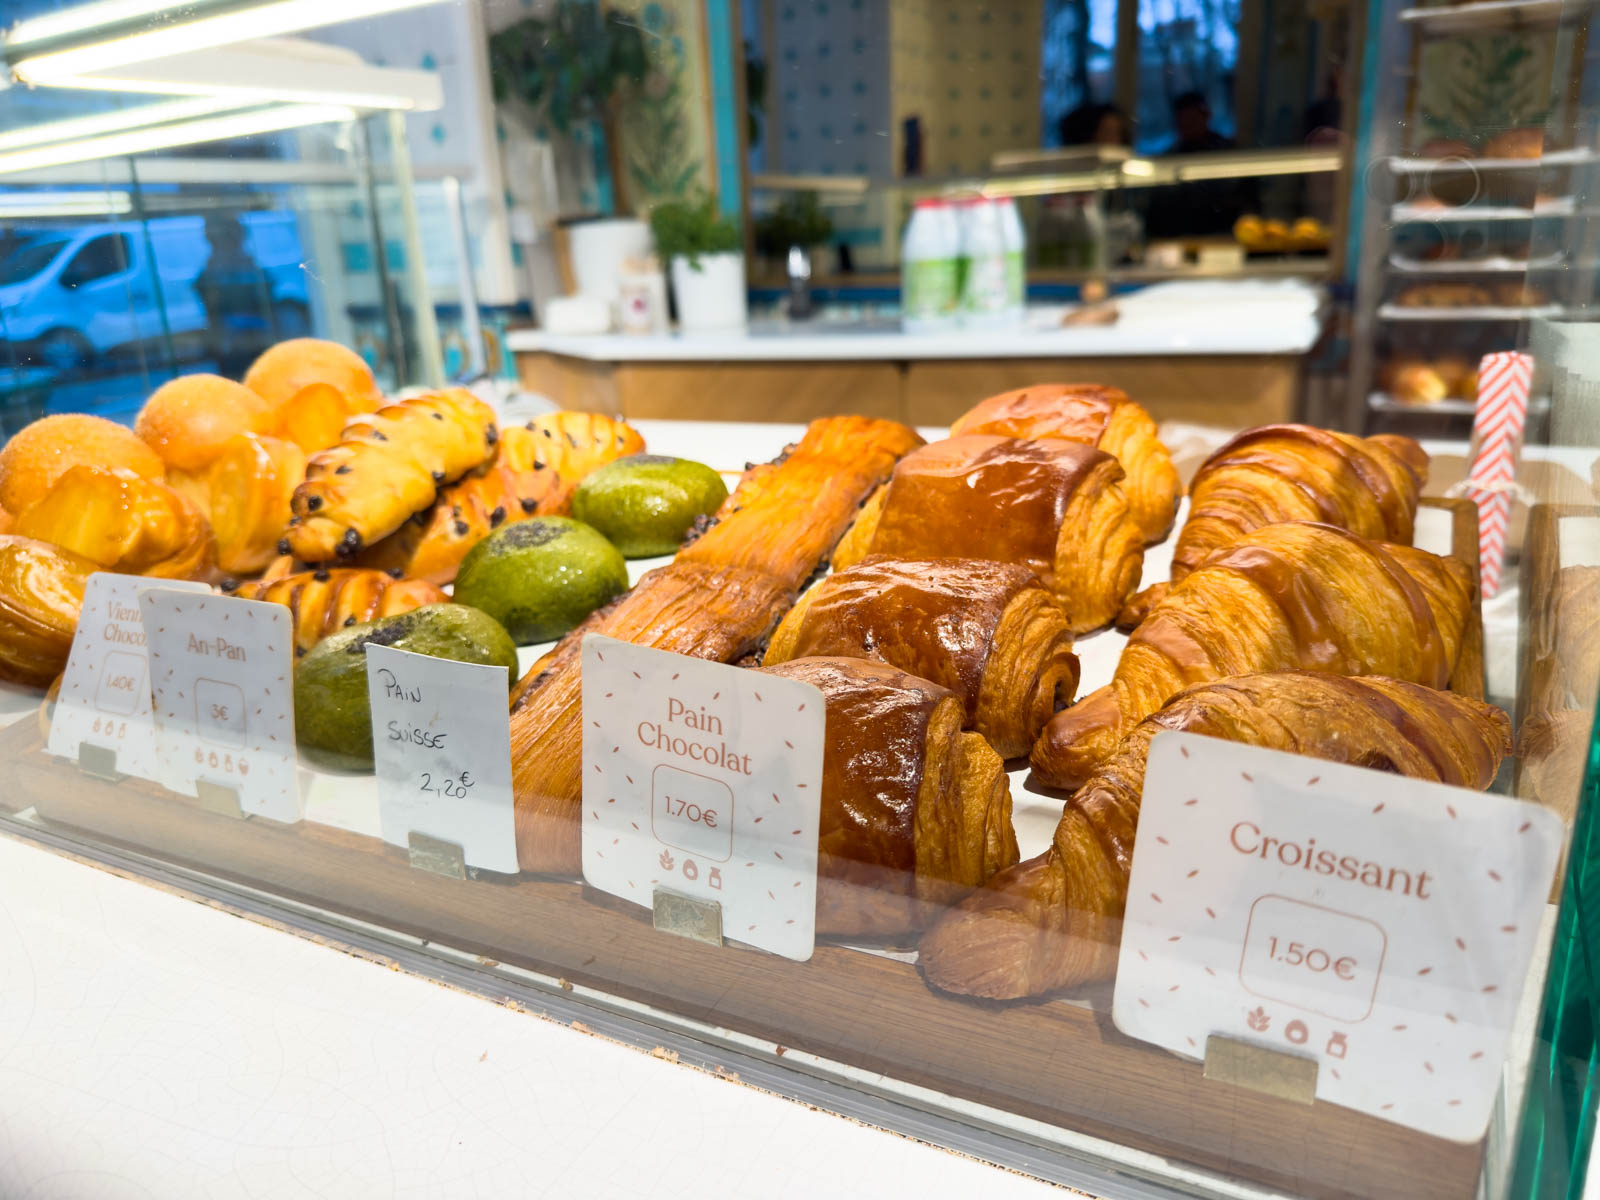 A bakery case has several fresh baked croissants.